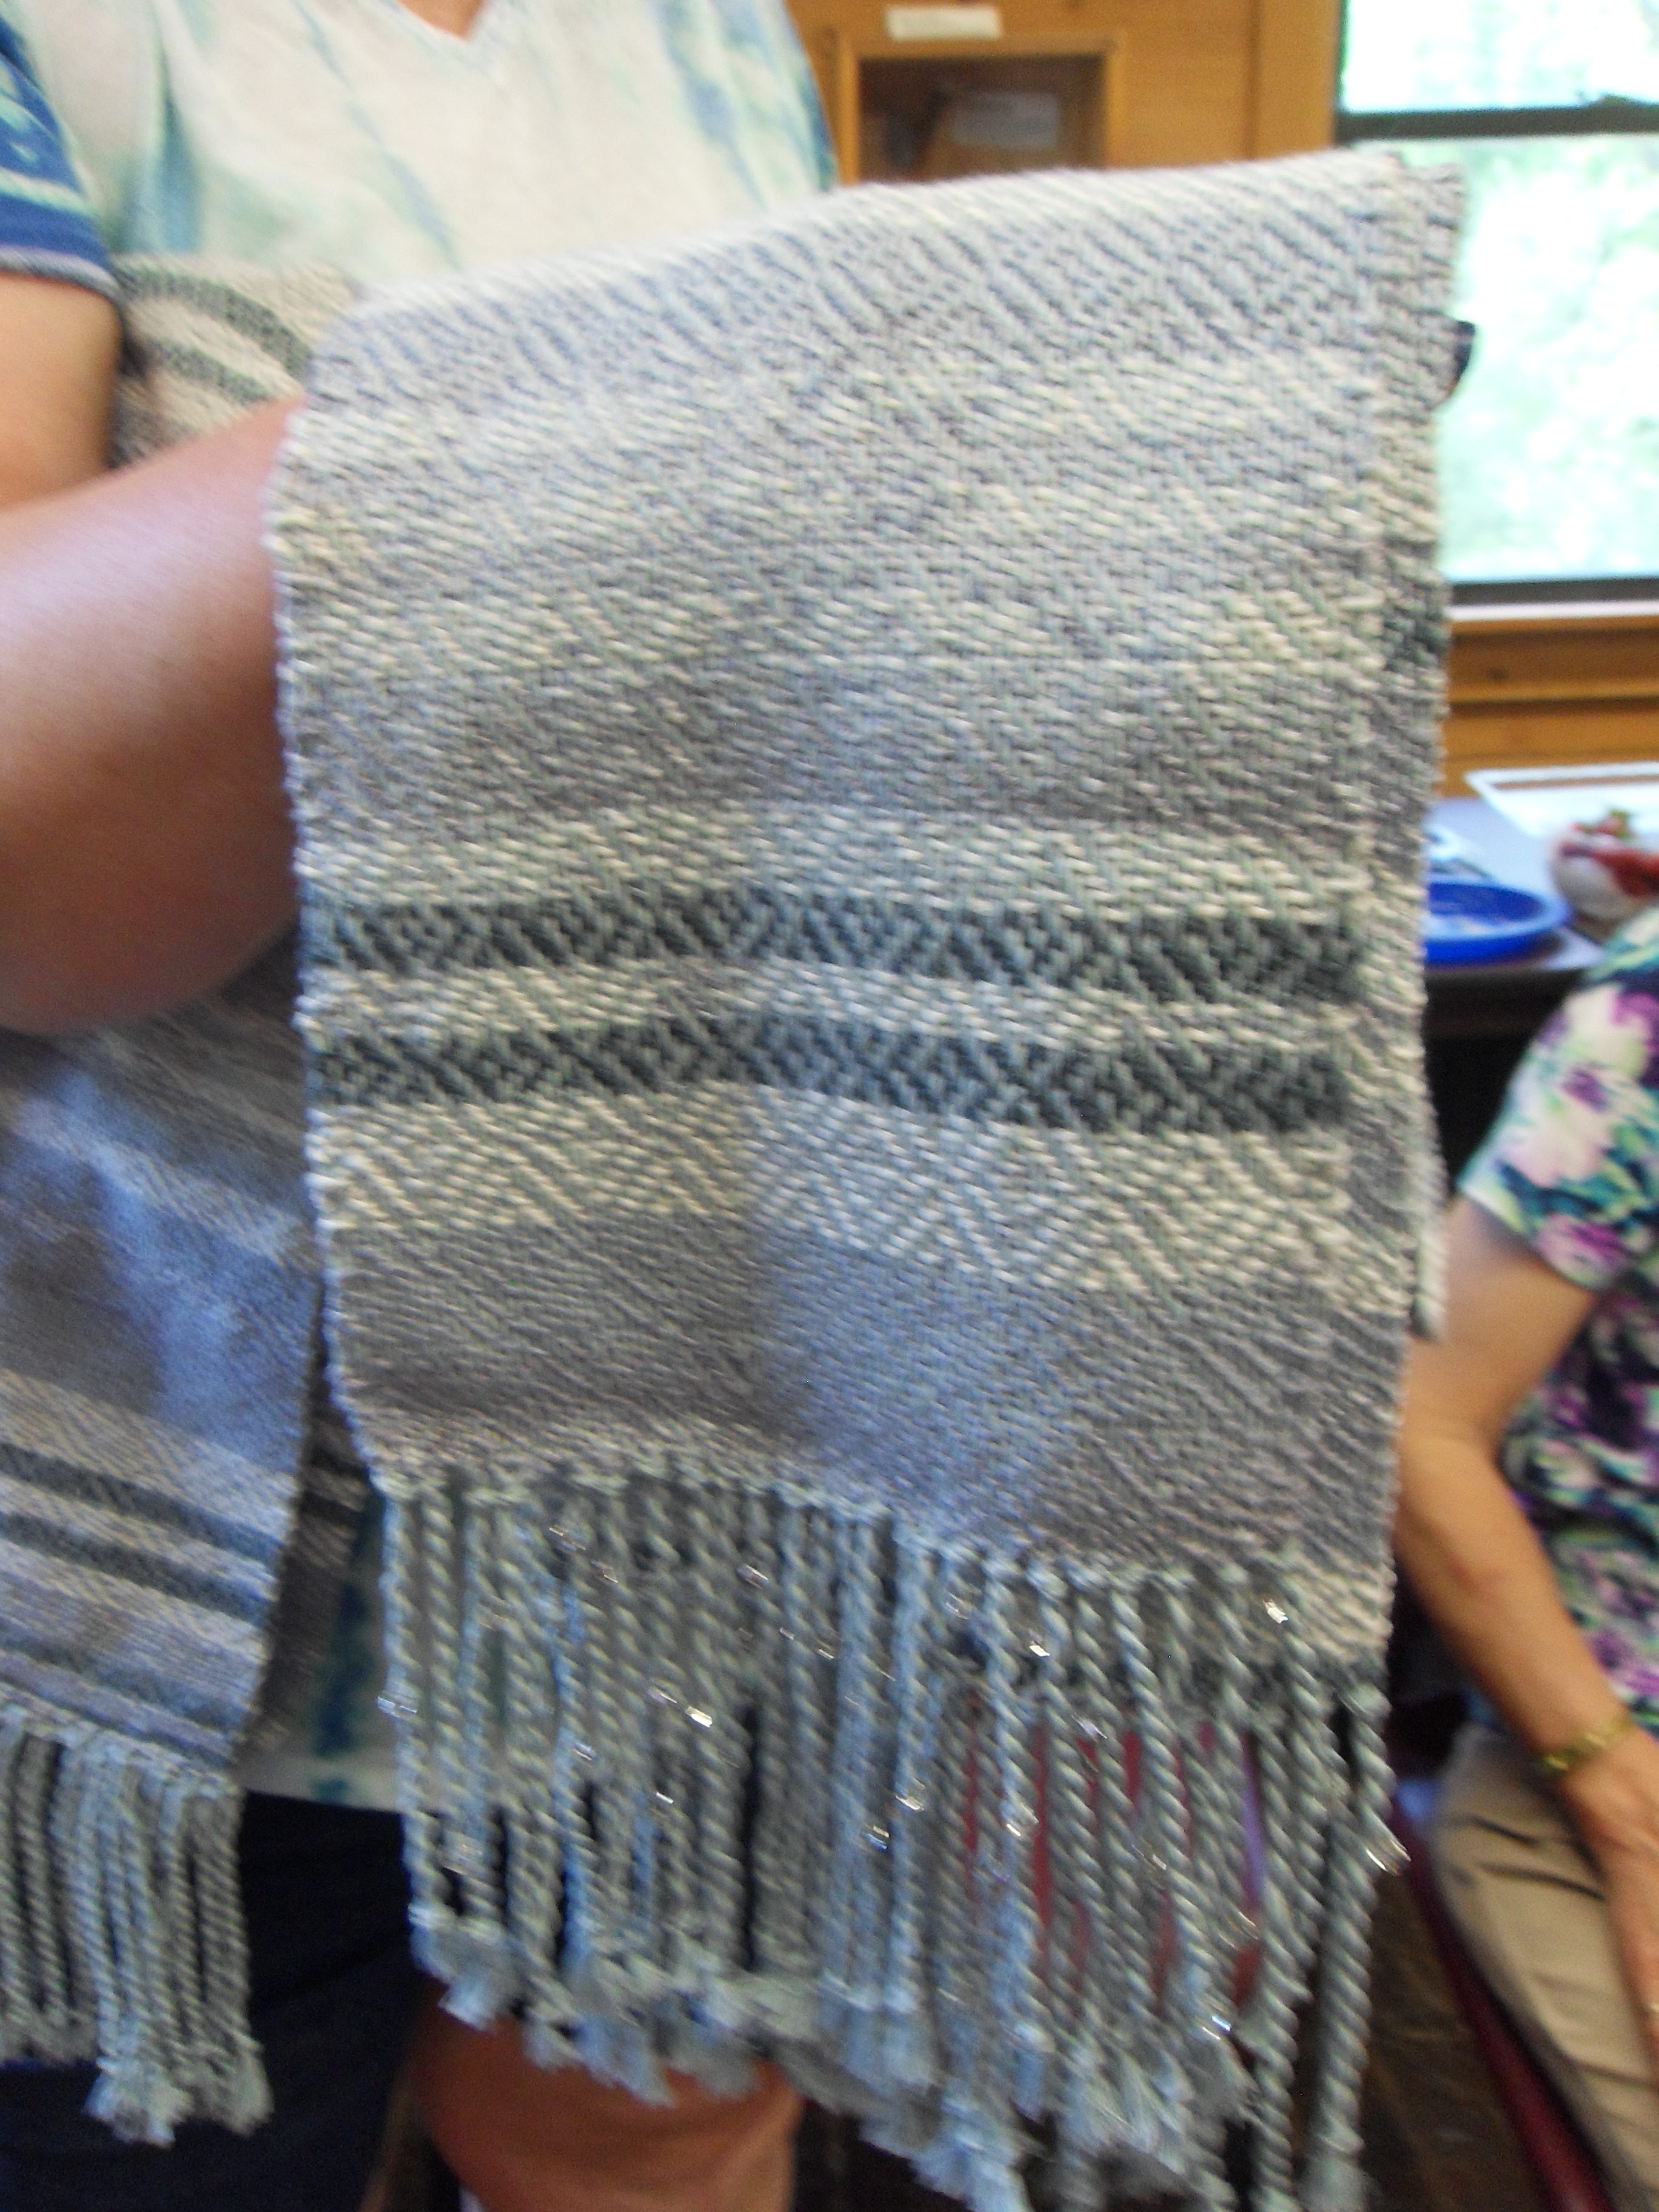 Nancy Parris' weaving